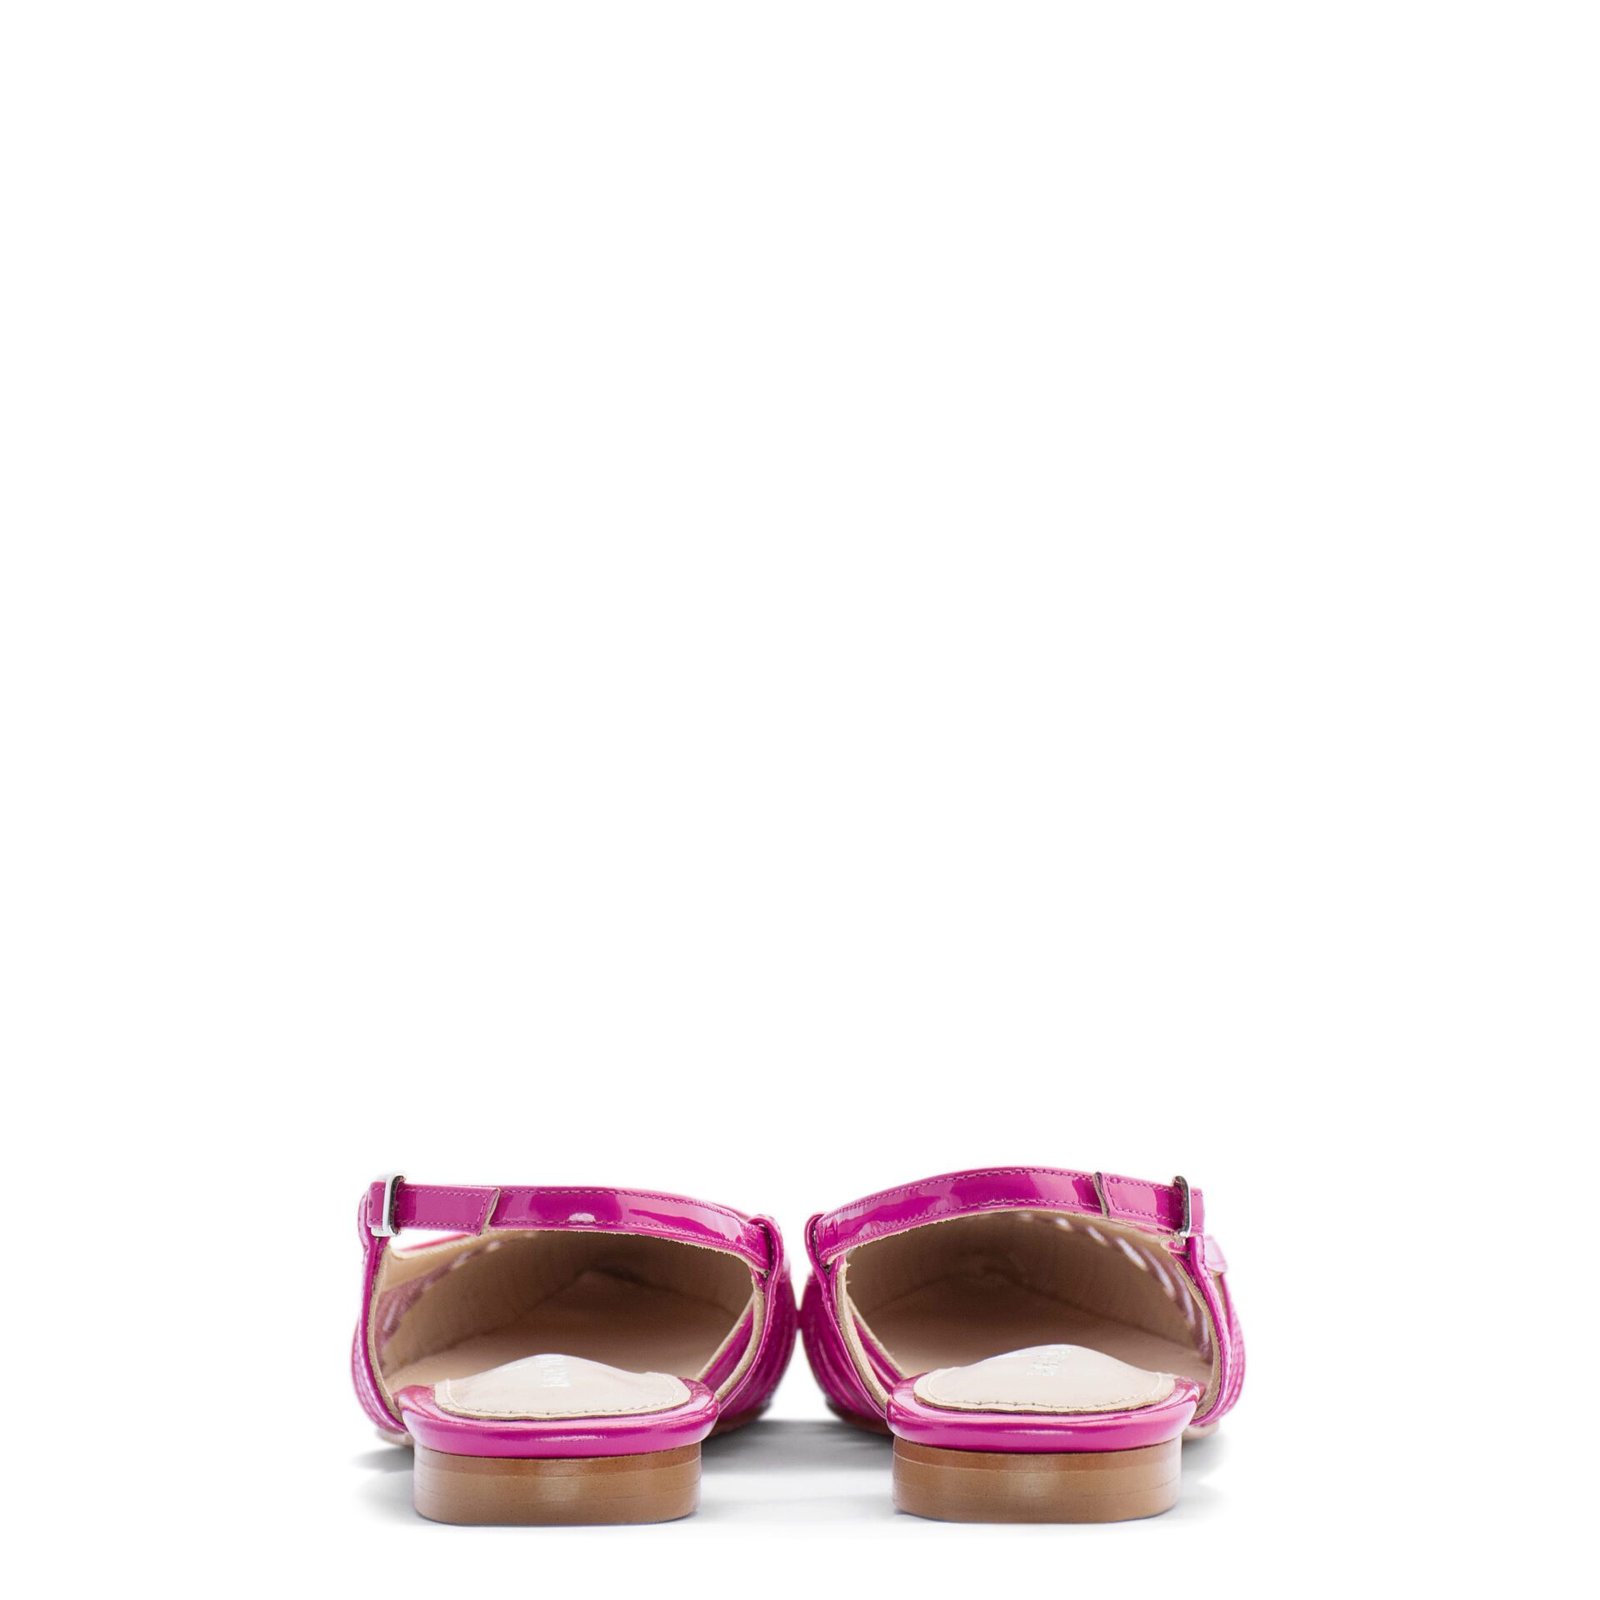 Pink slingback flat bridal shoes